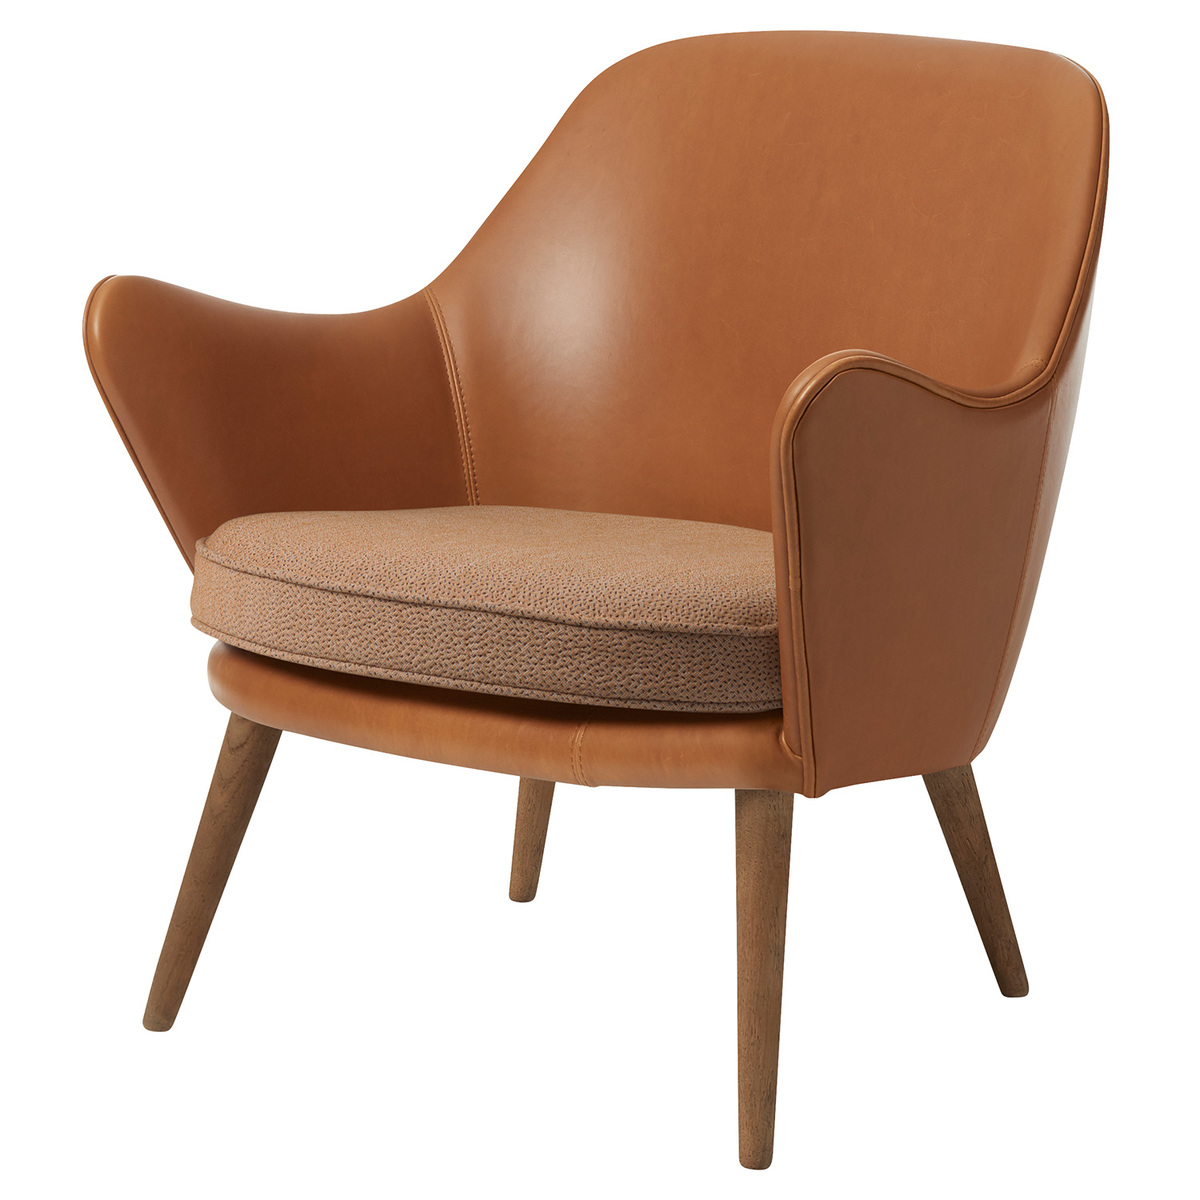 armchair, cognac leather - Sprinkles 254 | Finnish Design CH